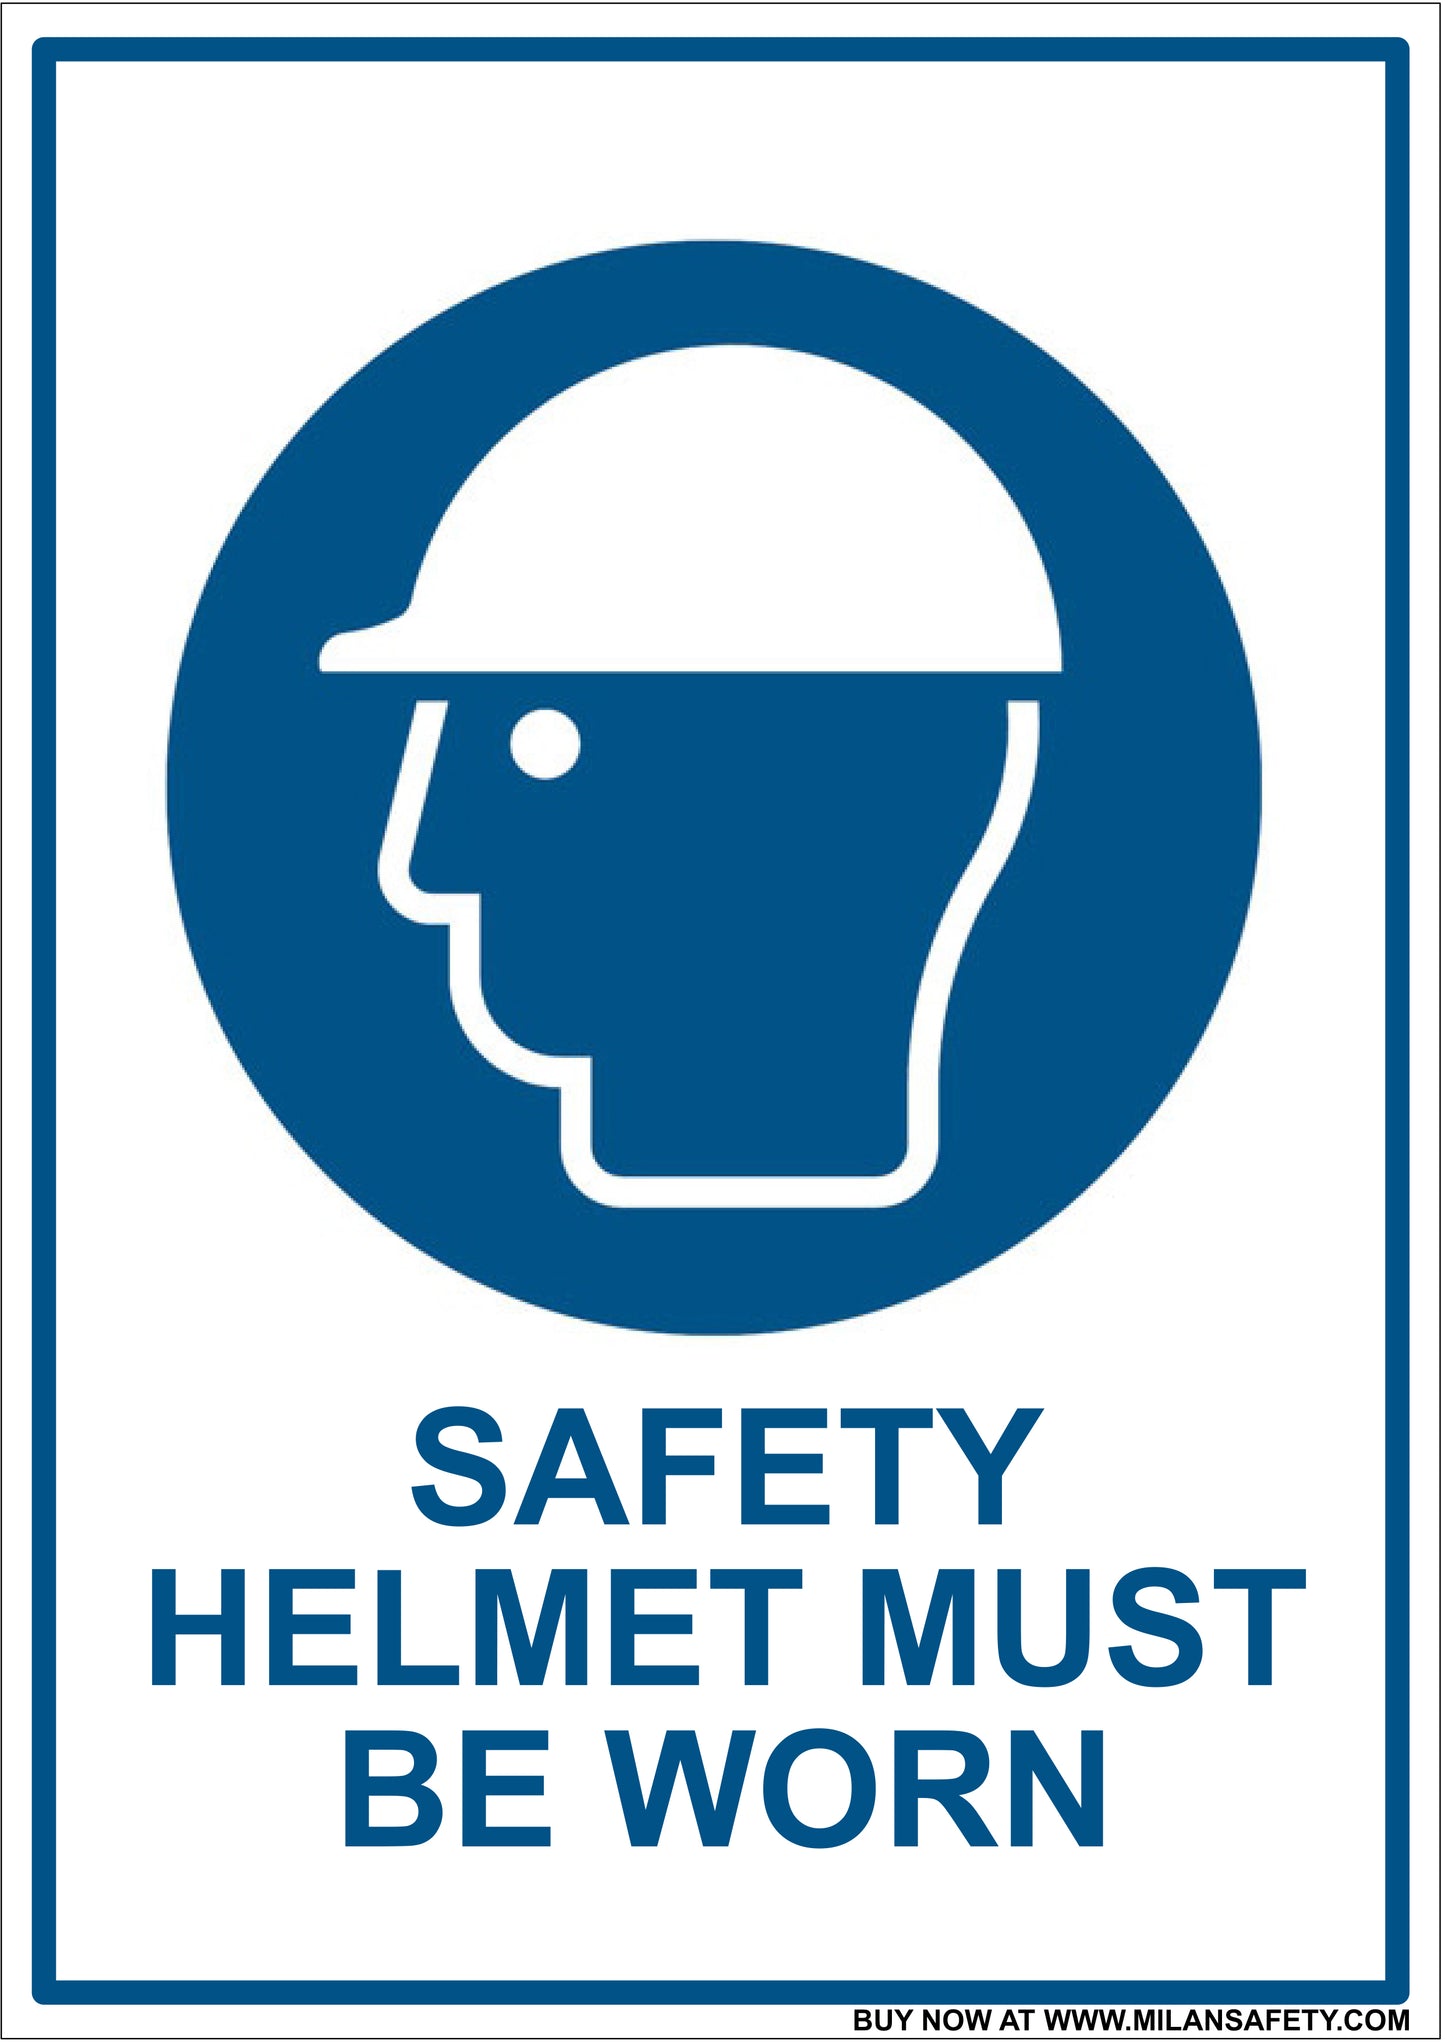 Safety helmet must be worn signage